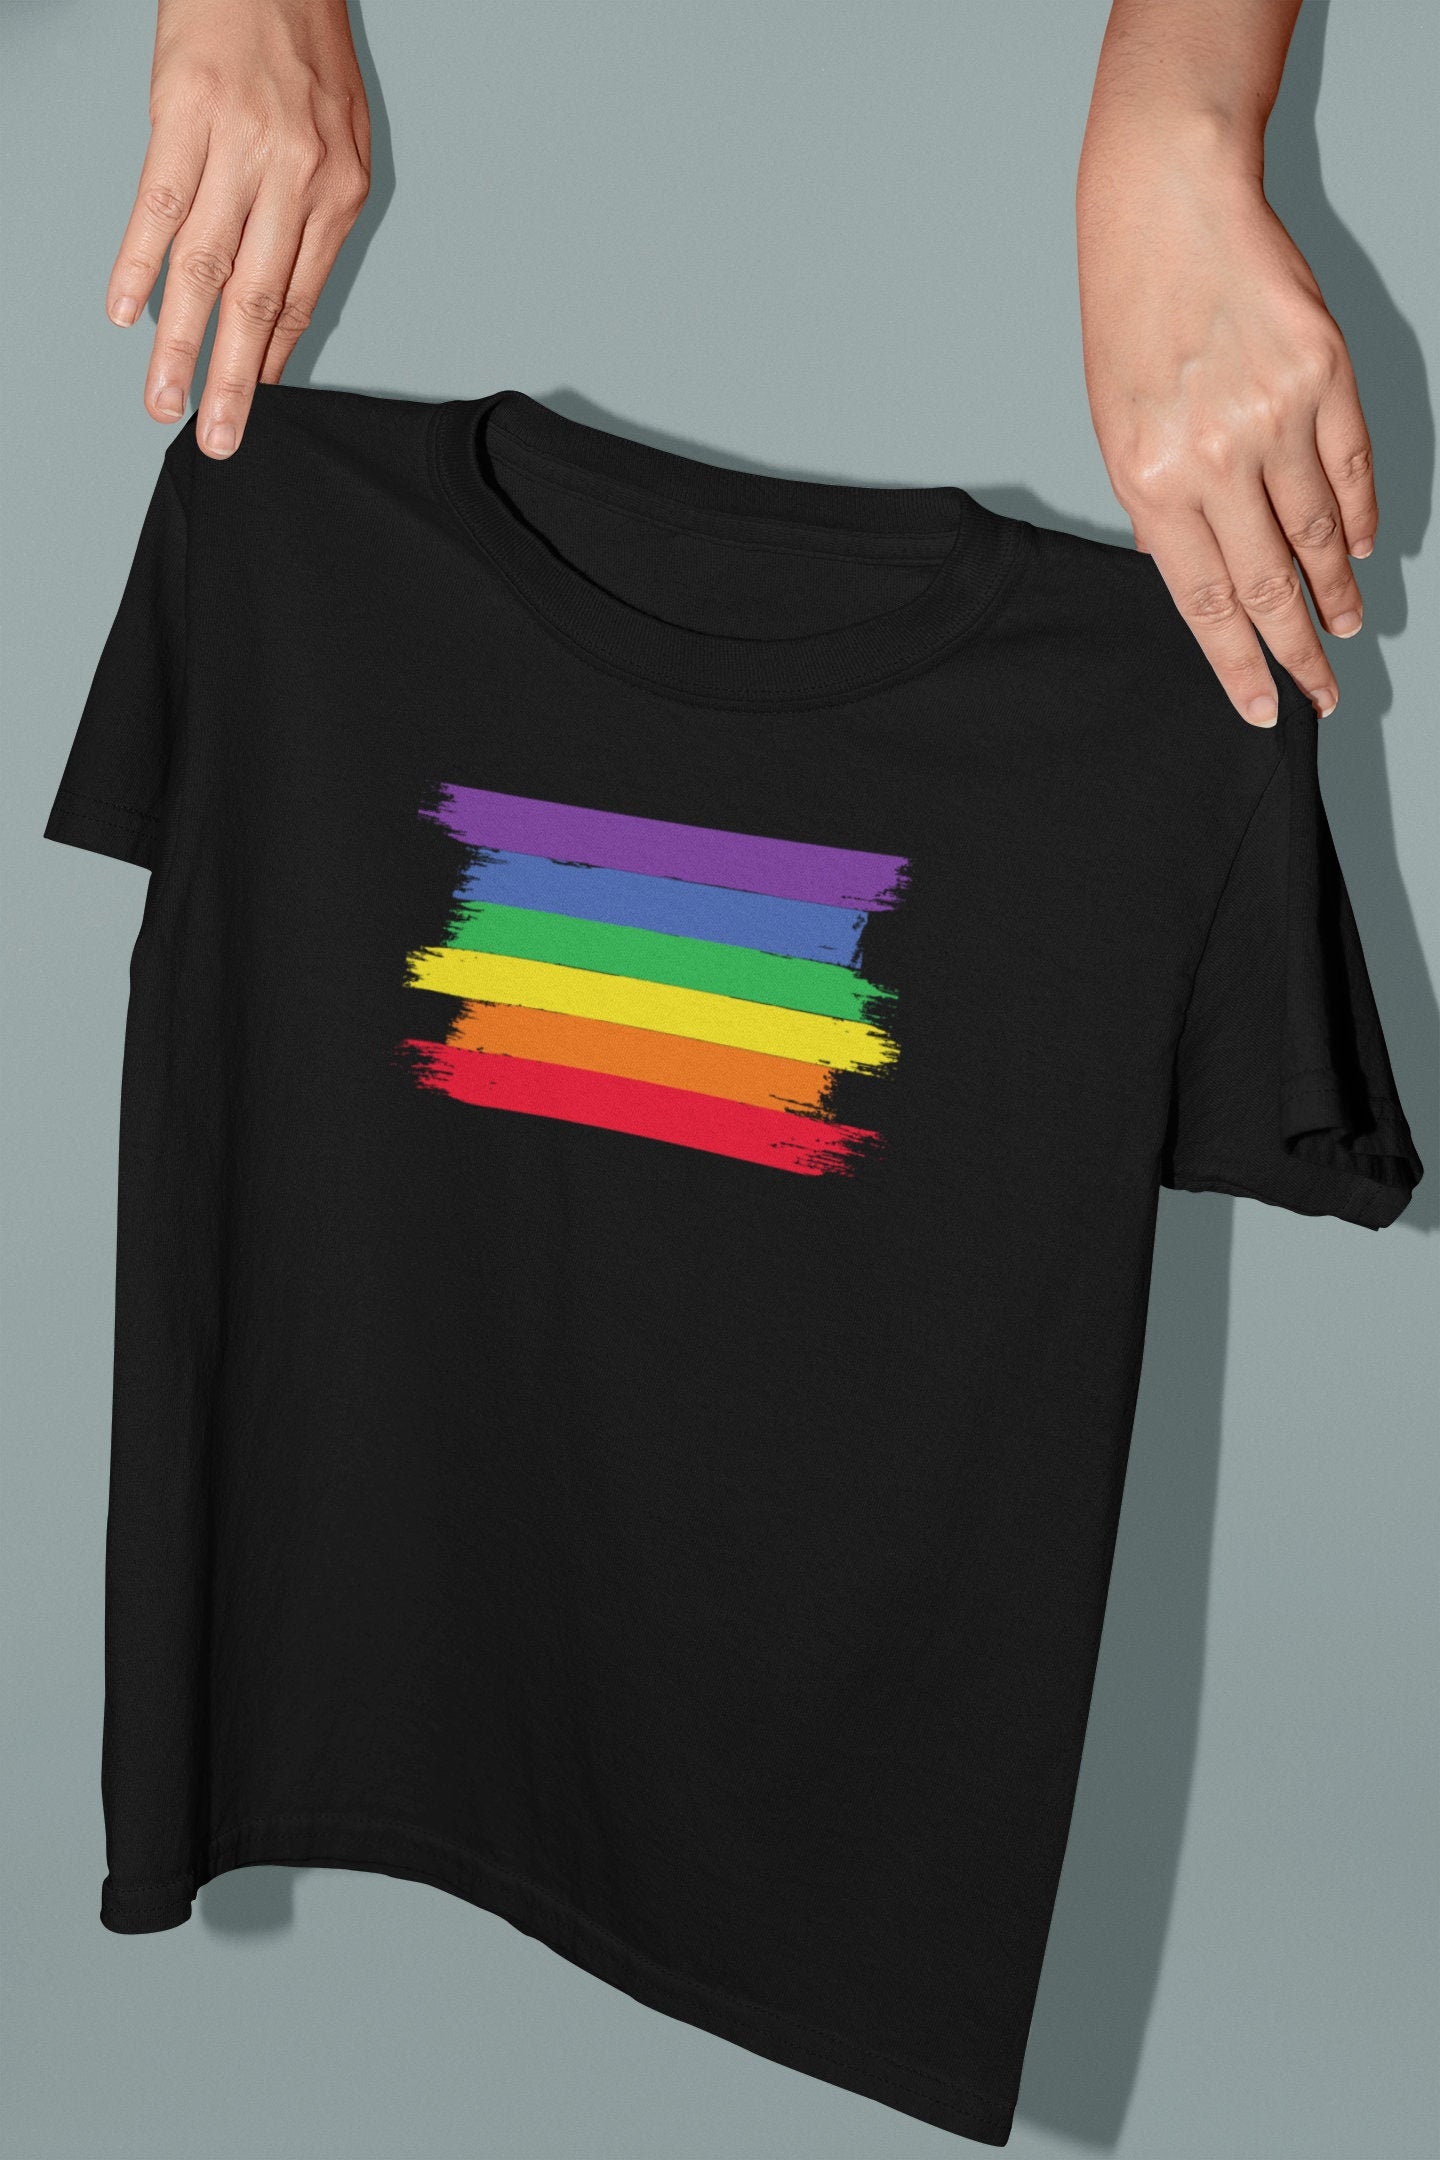 Pride t-shirt / UNISEX Rainbow tee / Pride gift / LGBT flag | Etsy